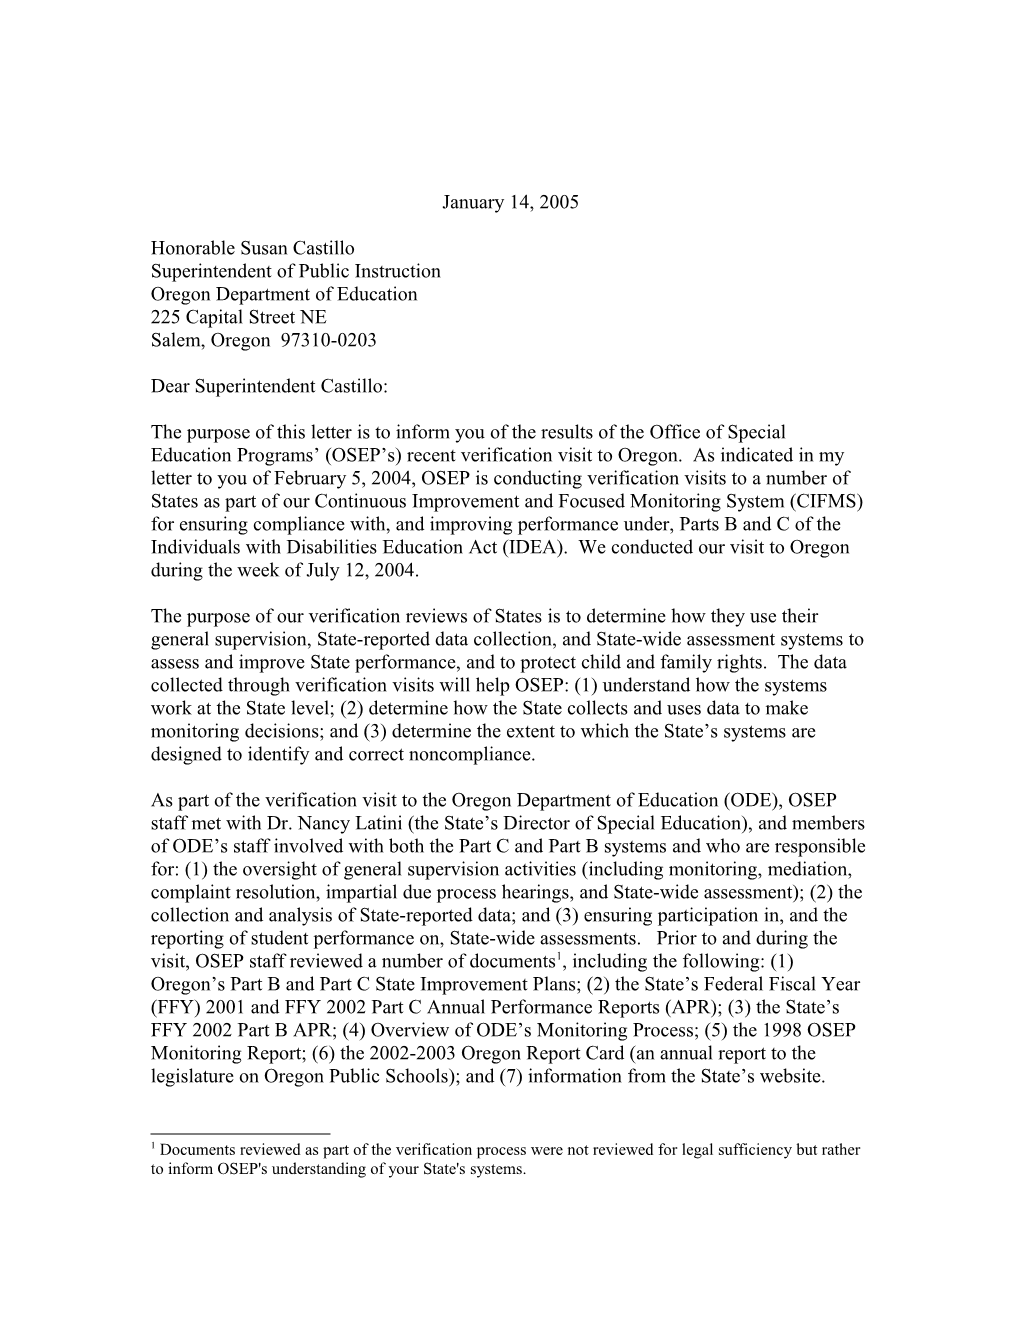 Oregon Part B Verification Visit Letter, Dated January 14, 2005 (MS Word)